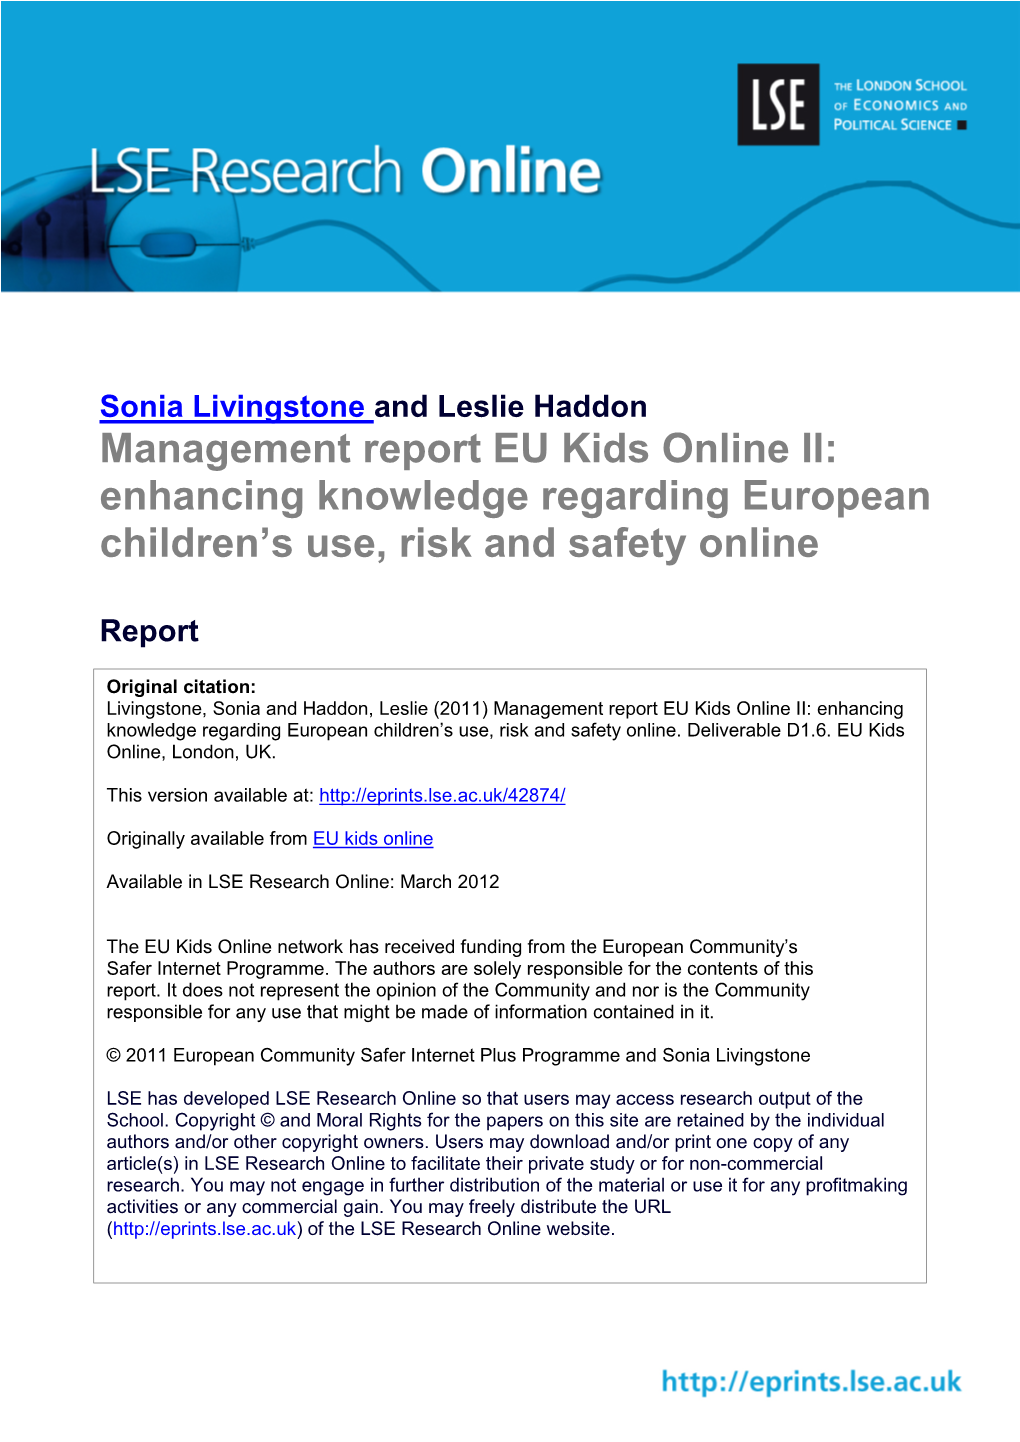 Management Report EU Kids Online II: Enhancing Knowledge Regarding European Children’S Use, Risk and Safety Online